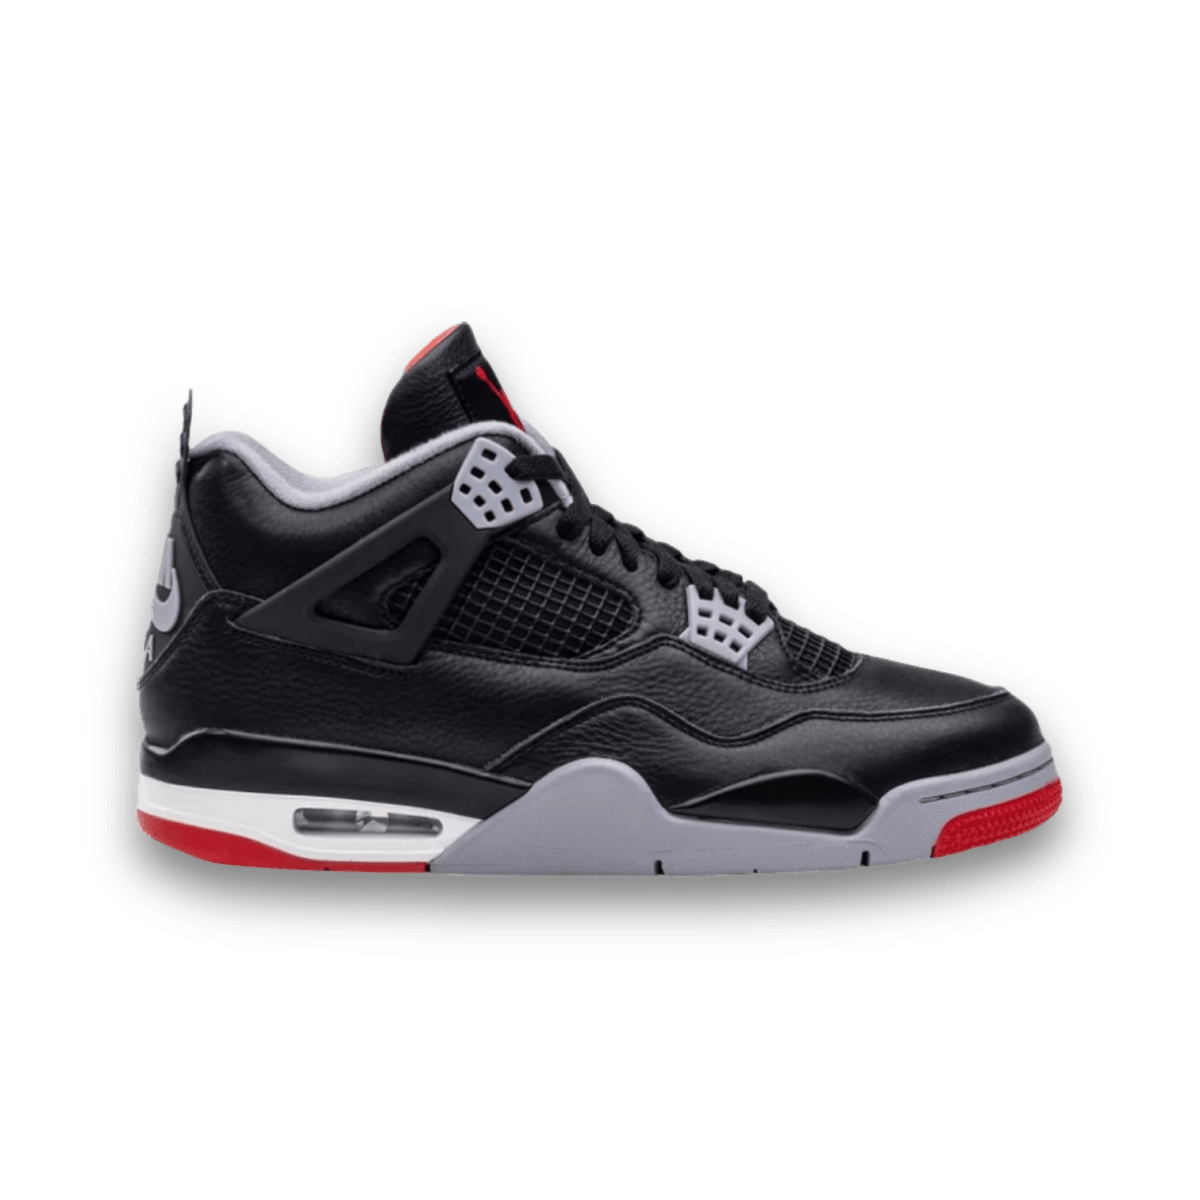 Air Jordan 4 Retro 'Bred Reimagined' - Mid Sneaker - Jordan - Jawns on Fire - sneakers